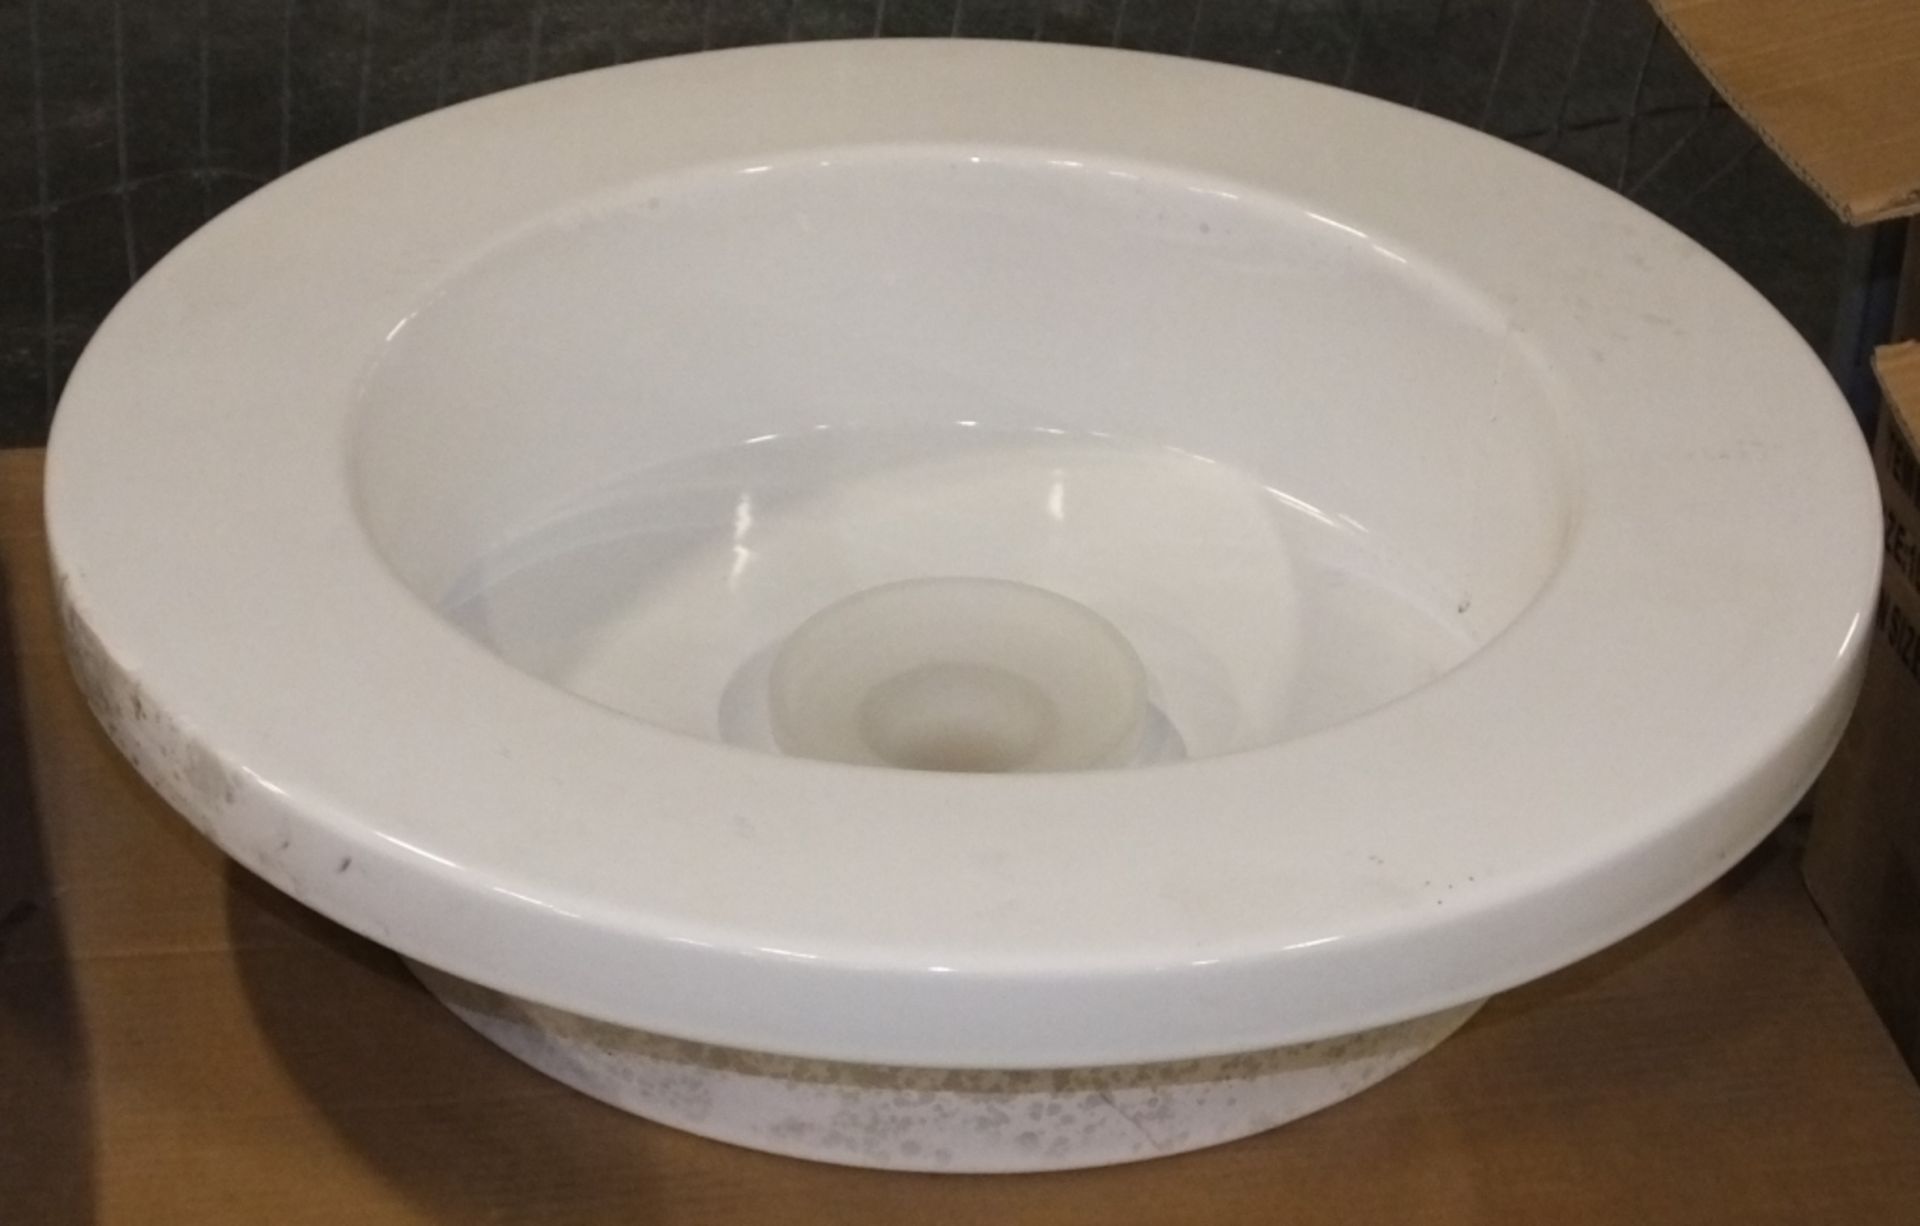 6x White Stone Round Sink Basins - WS02401F - Image 2 of 3